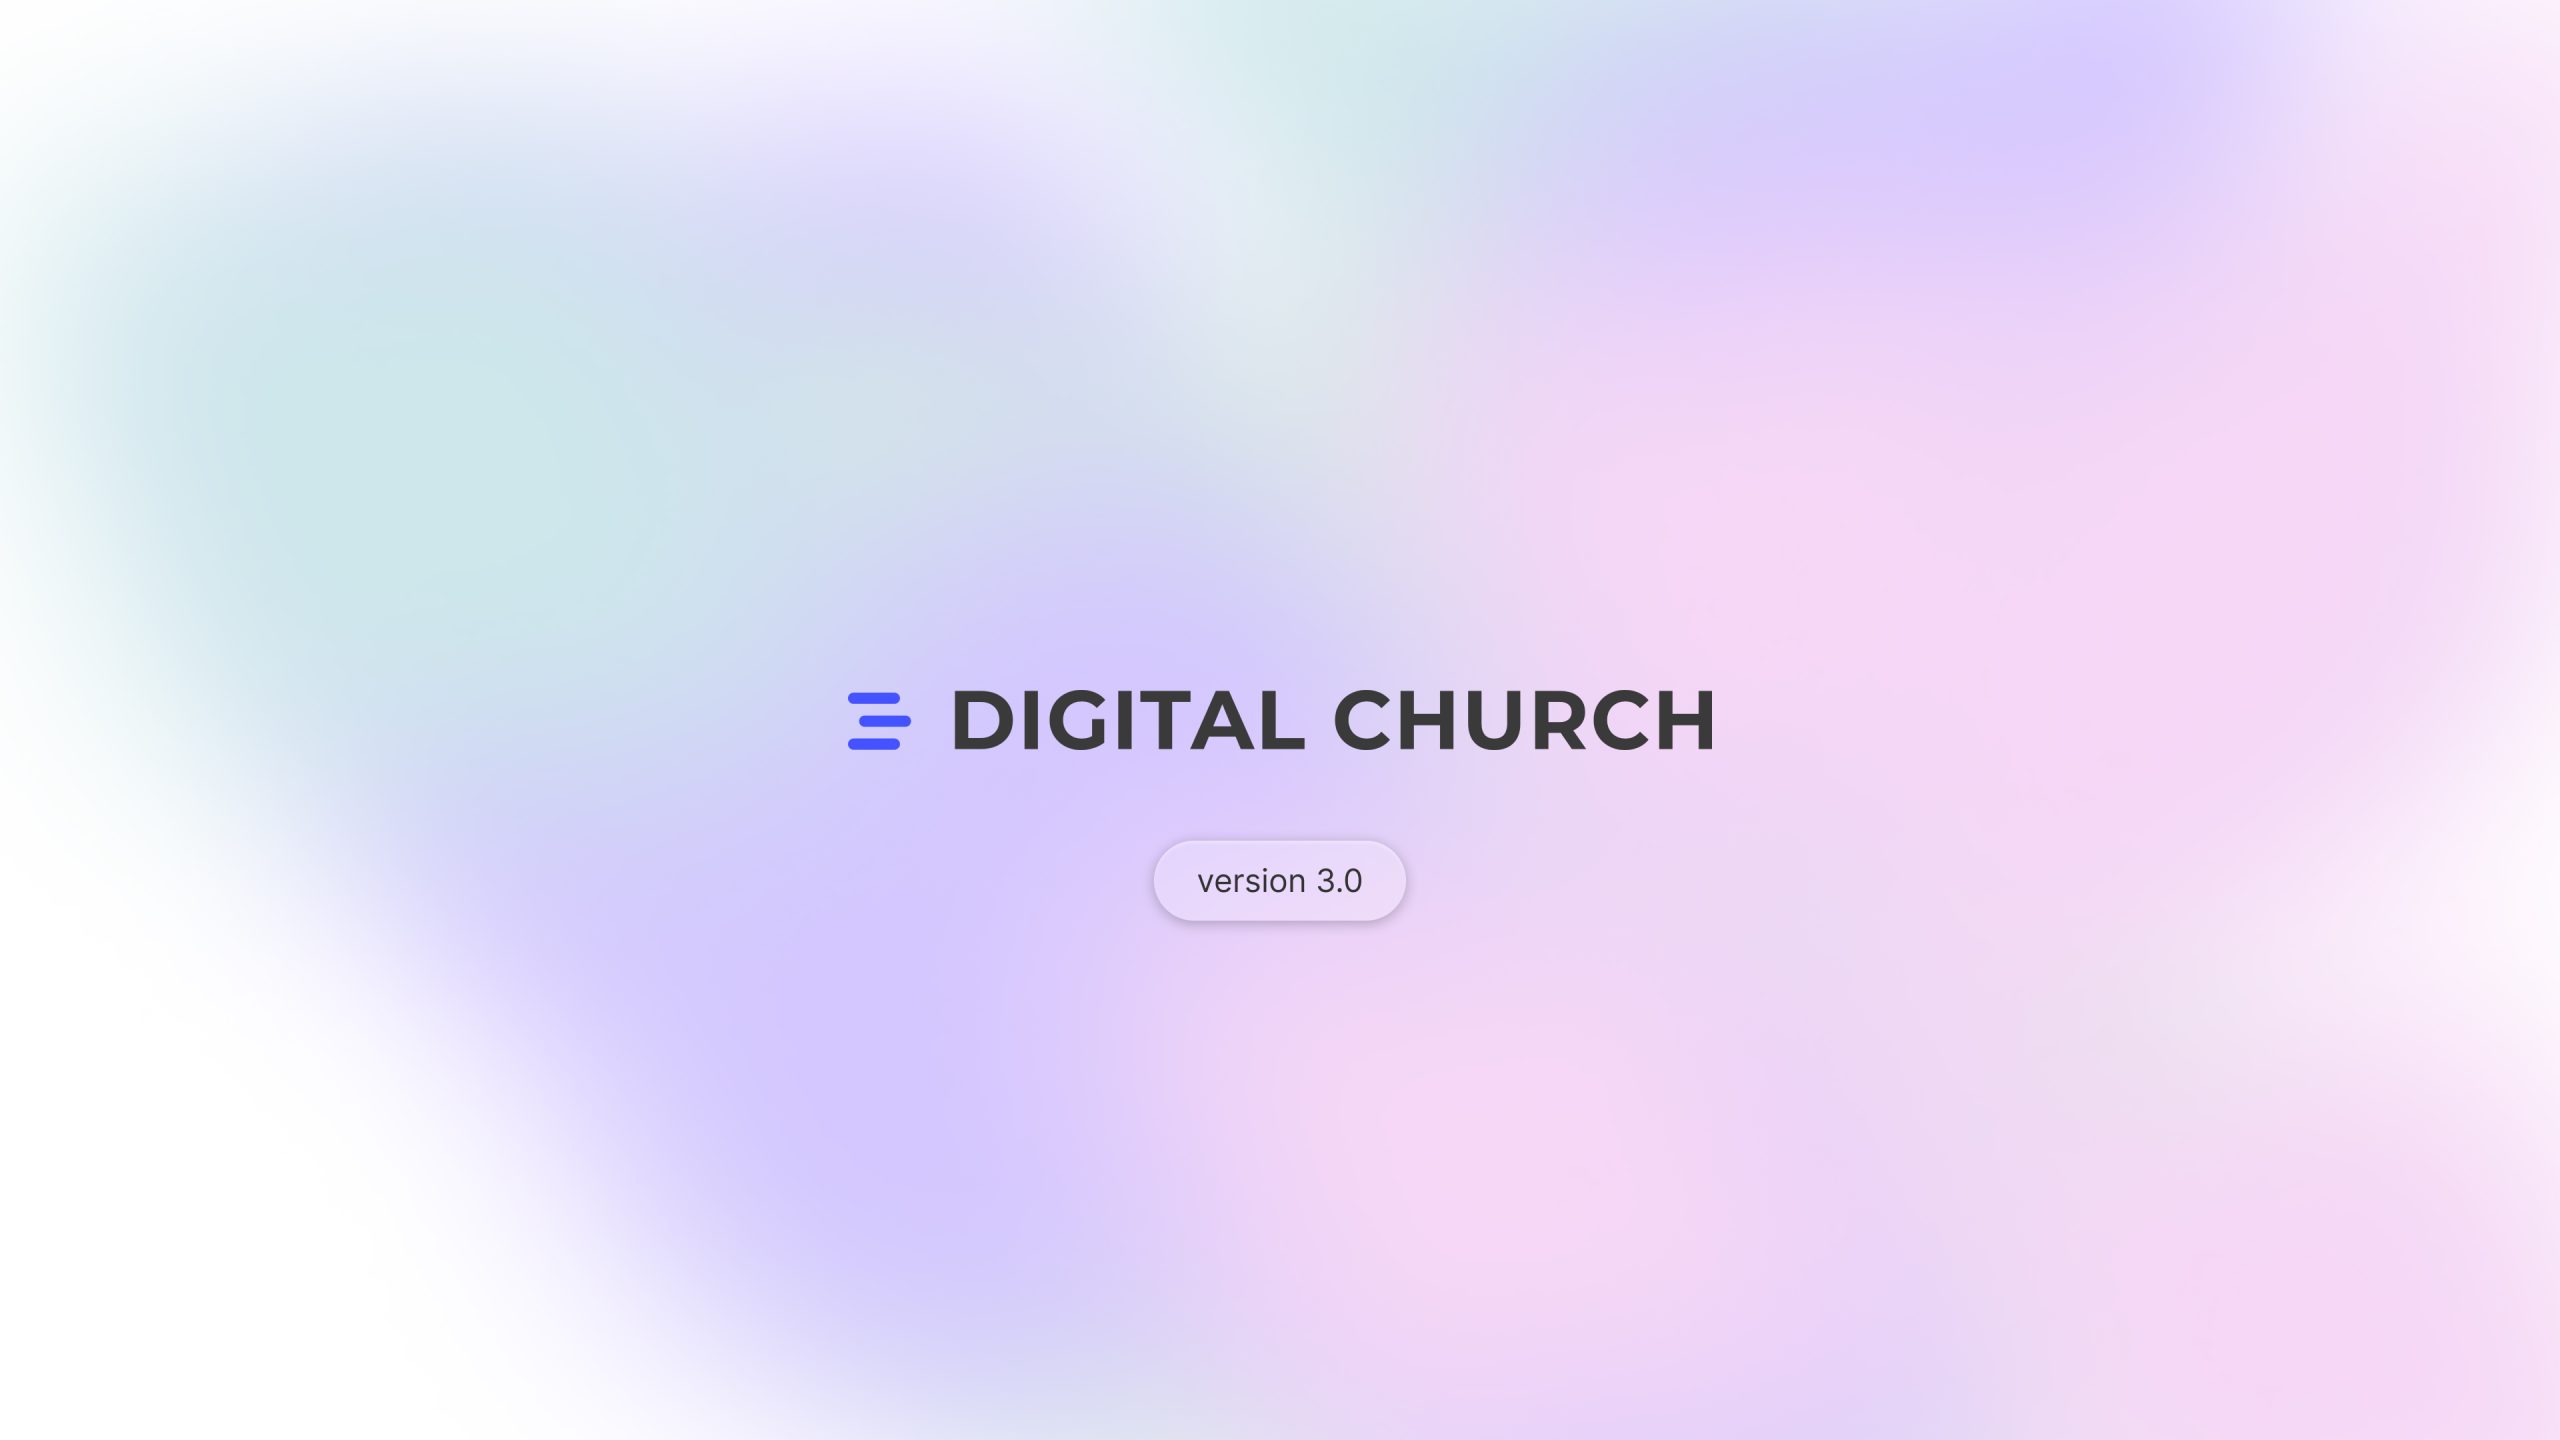 A digital church's blurry website background.